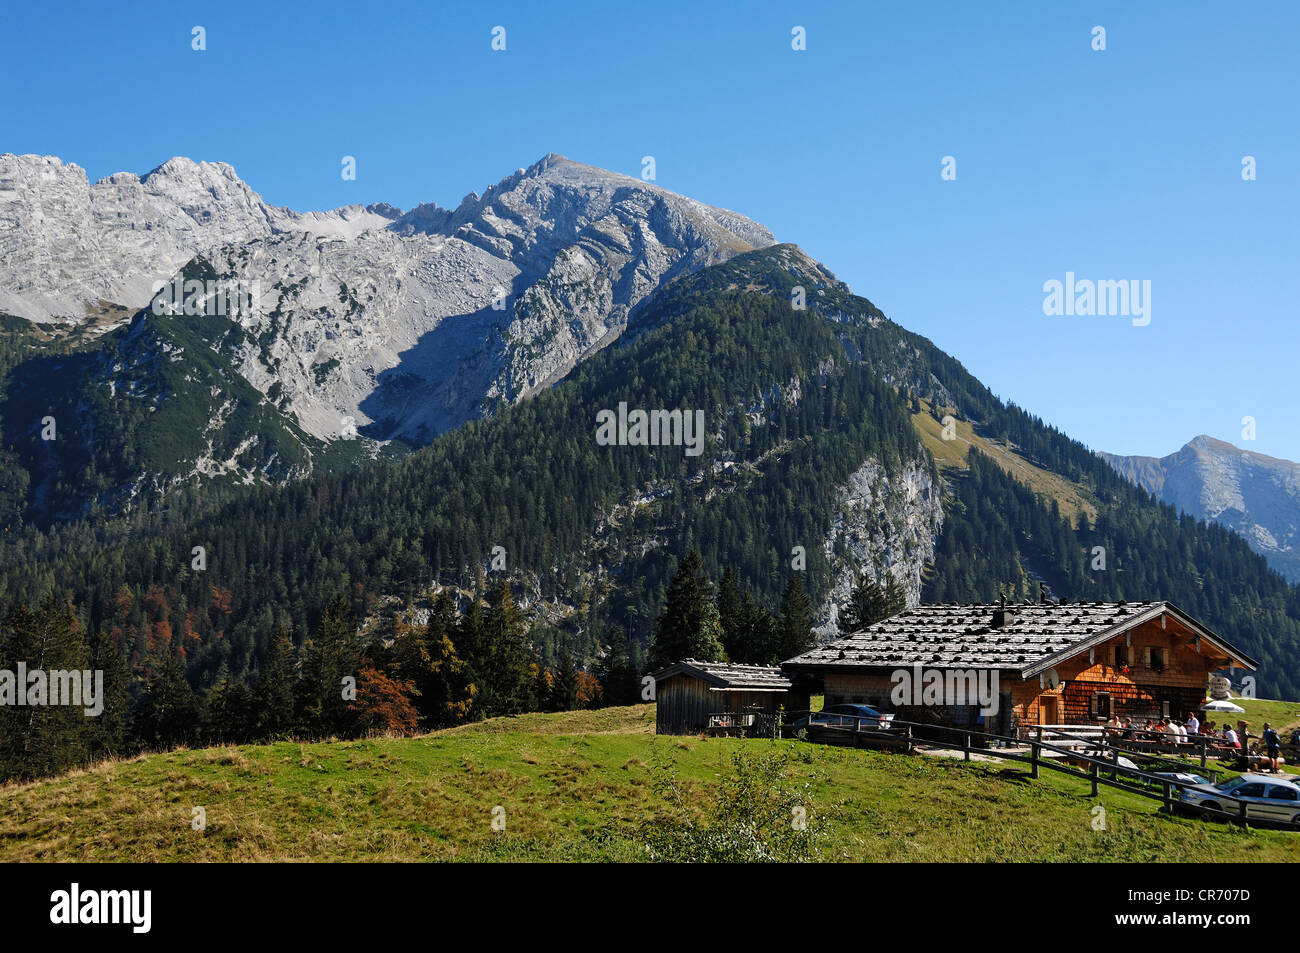 Litzlalm, alp, with restaurant, 1300m, Mt Reiteralpe at back, Zell am See, Austria, Europe Stock Photo